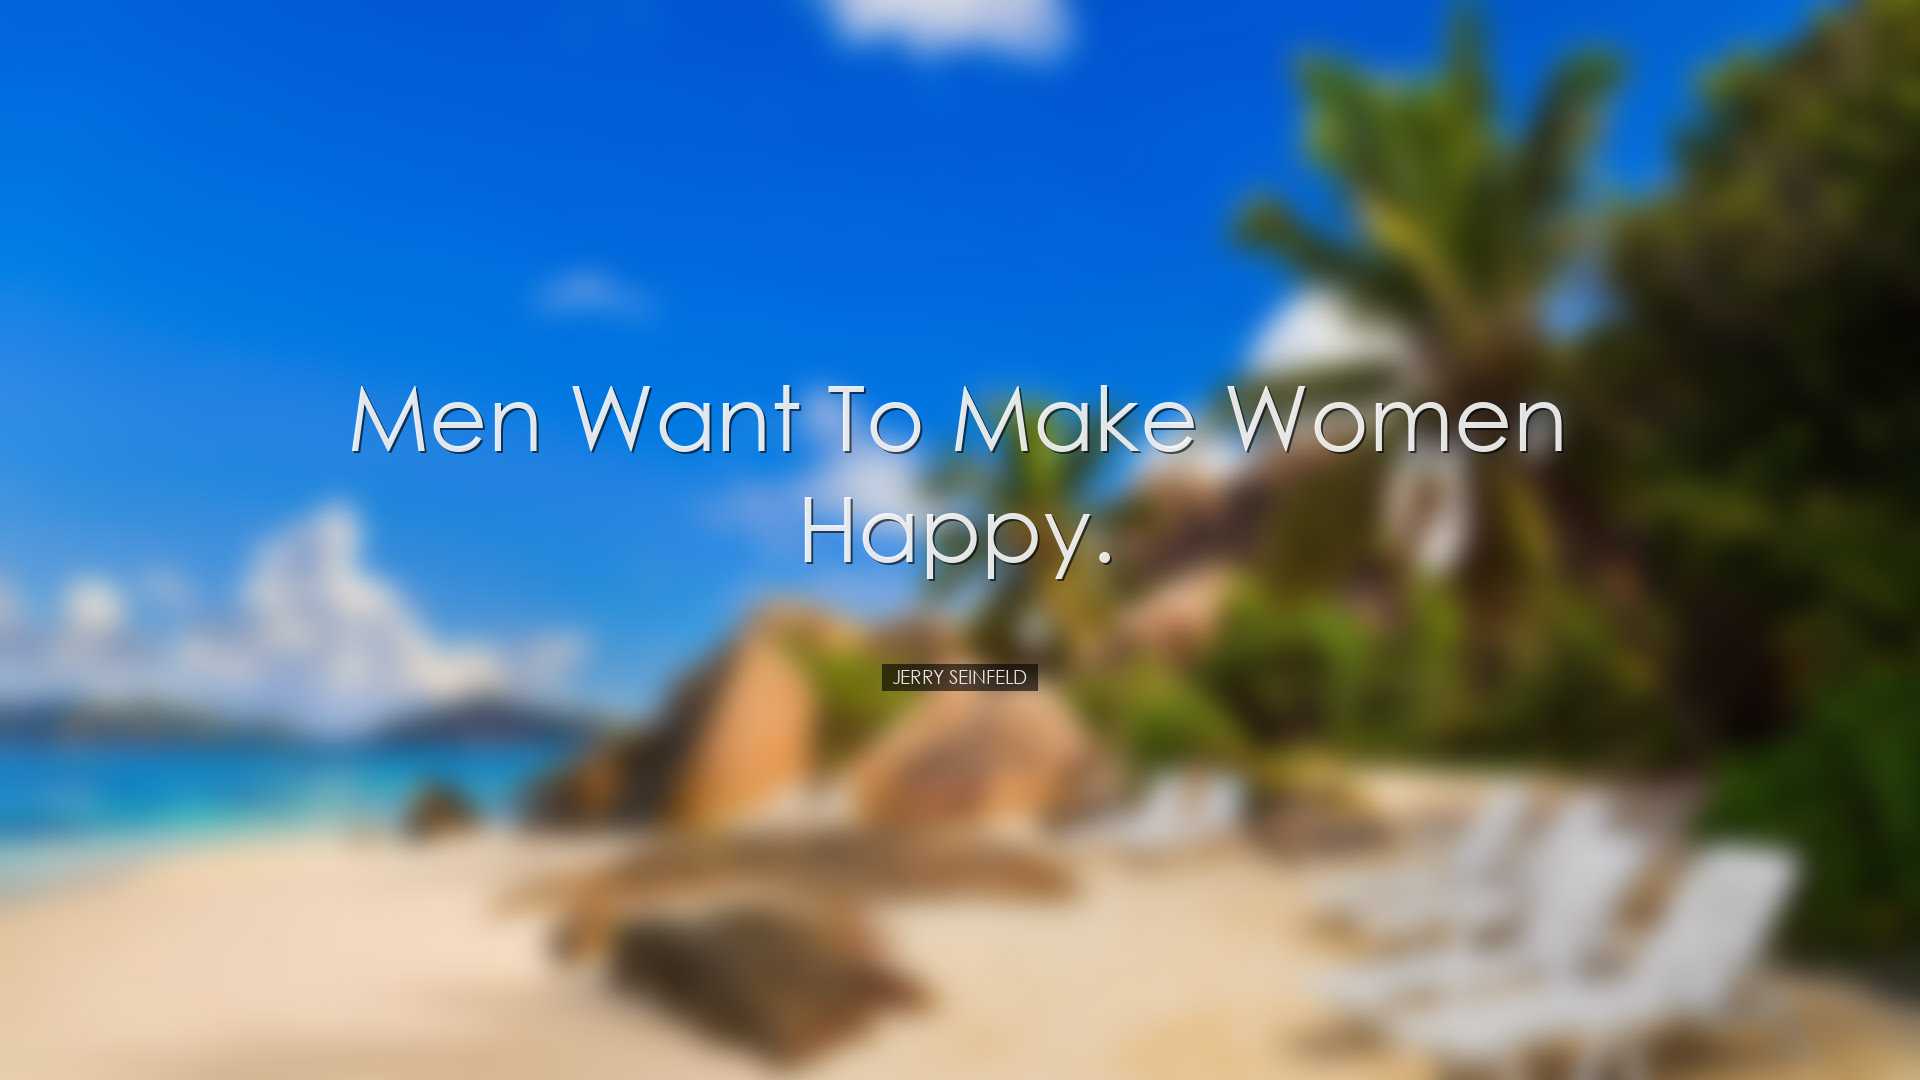 Men want to make women happy. - Jerry Seinfeld